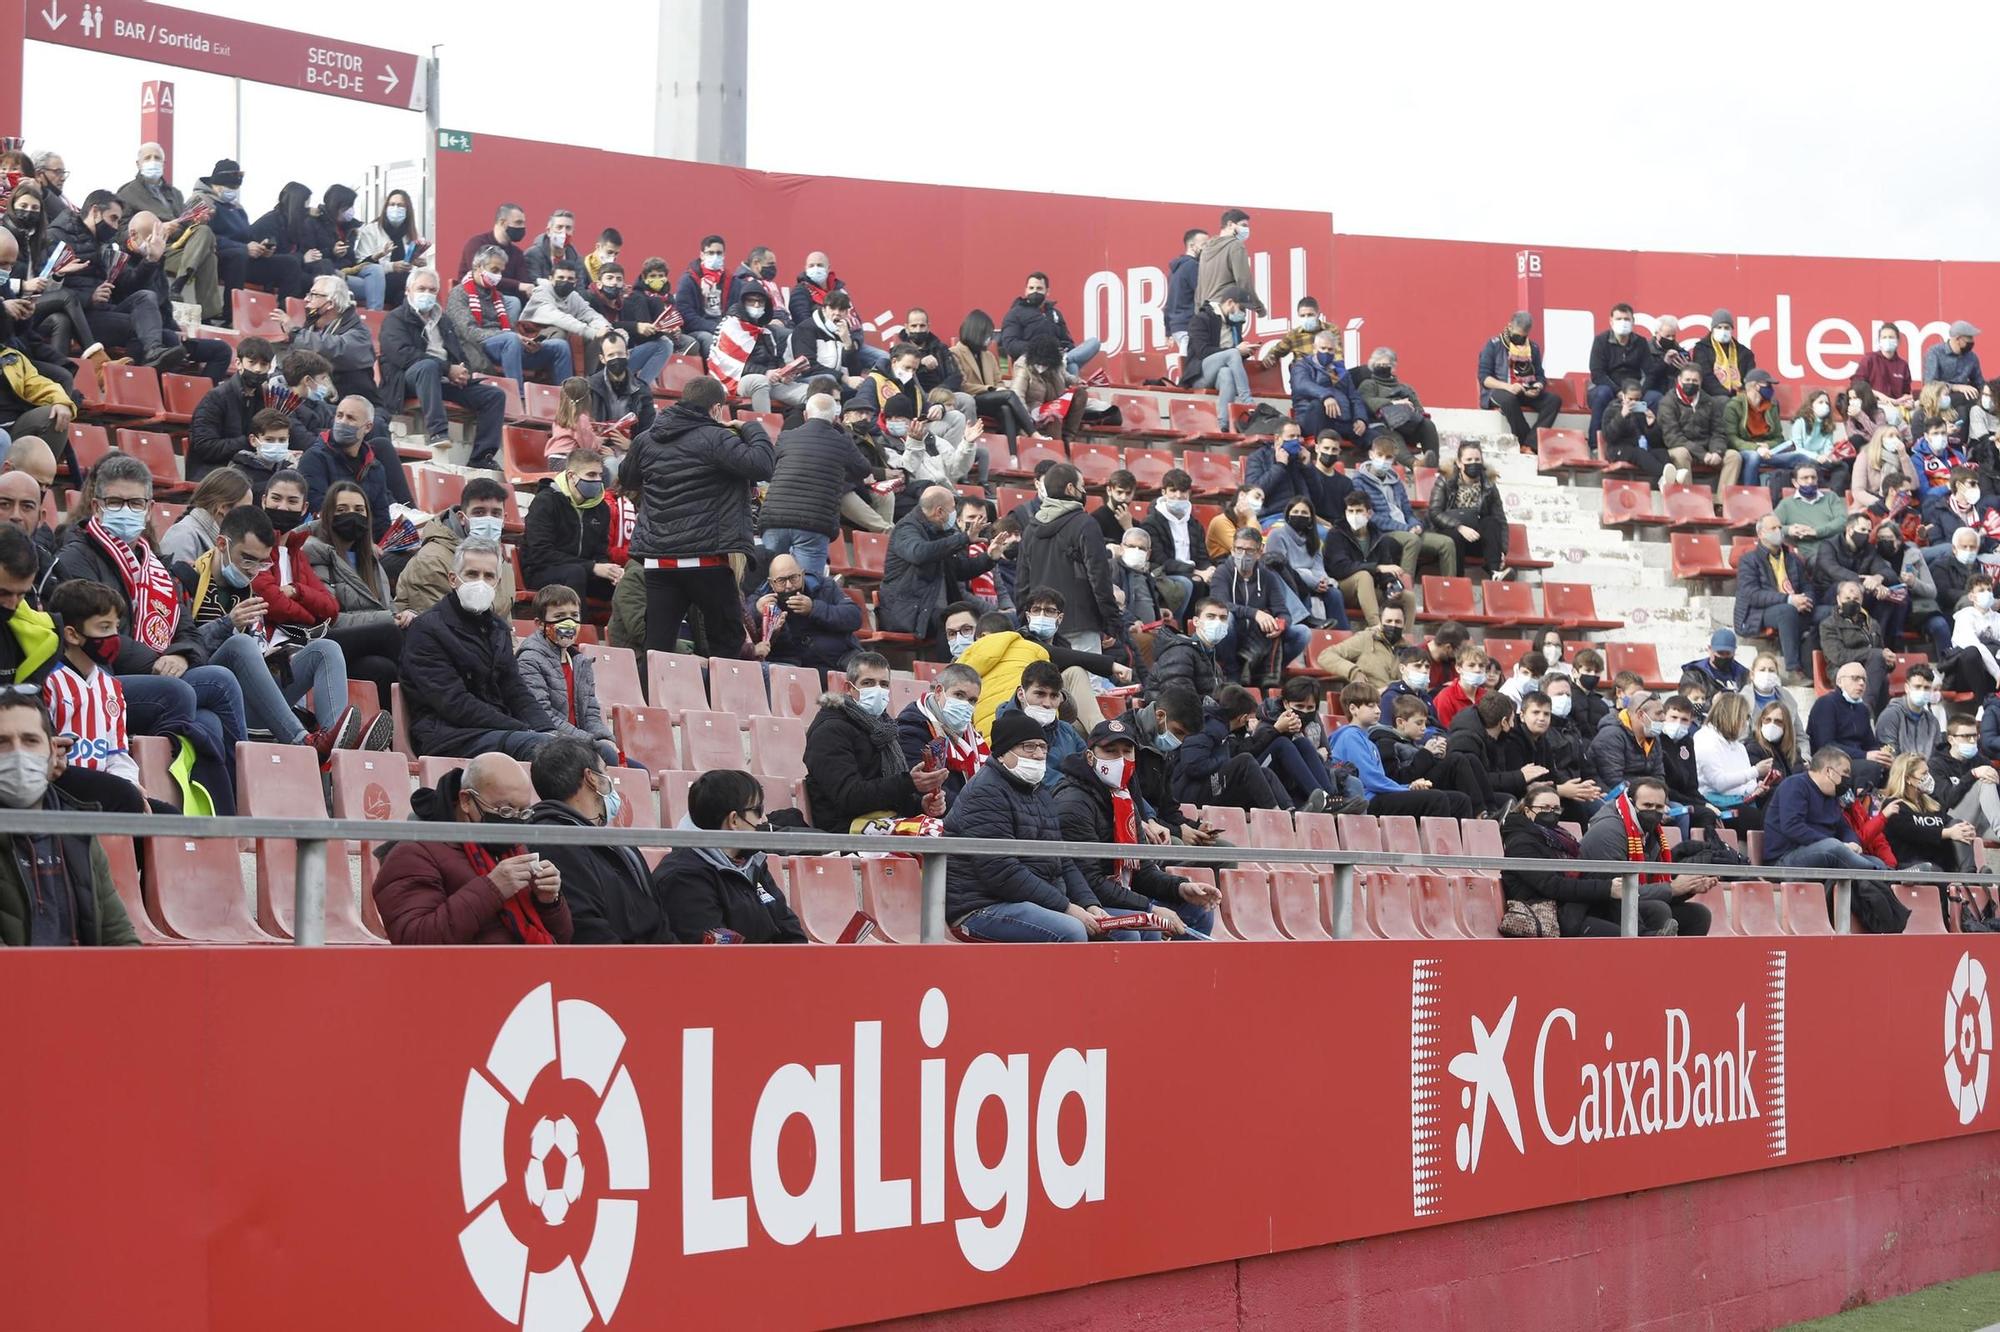 Girona 2-1 Fuenlabrada: La fantasia impulsa el Girona